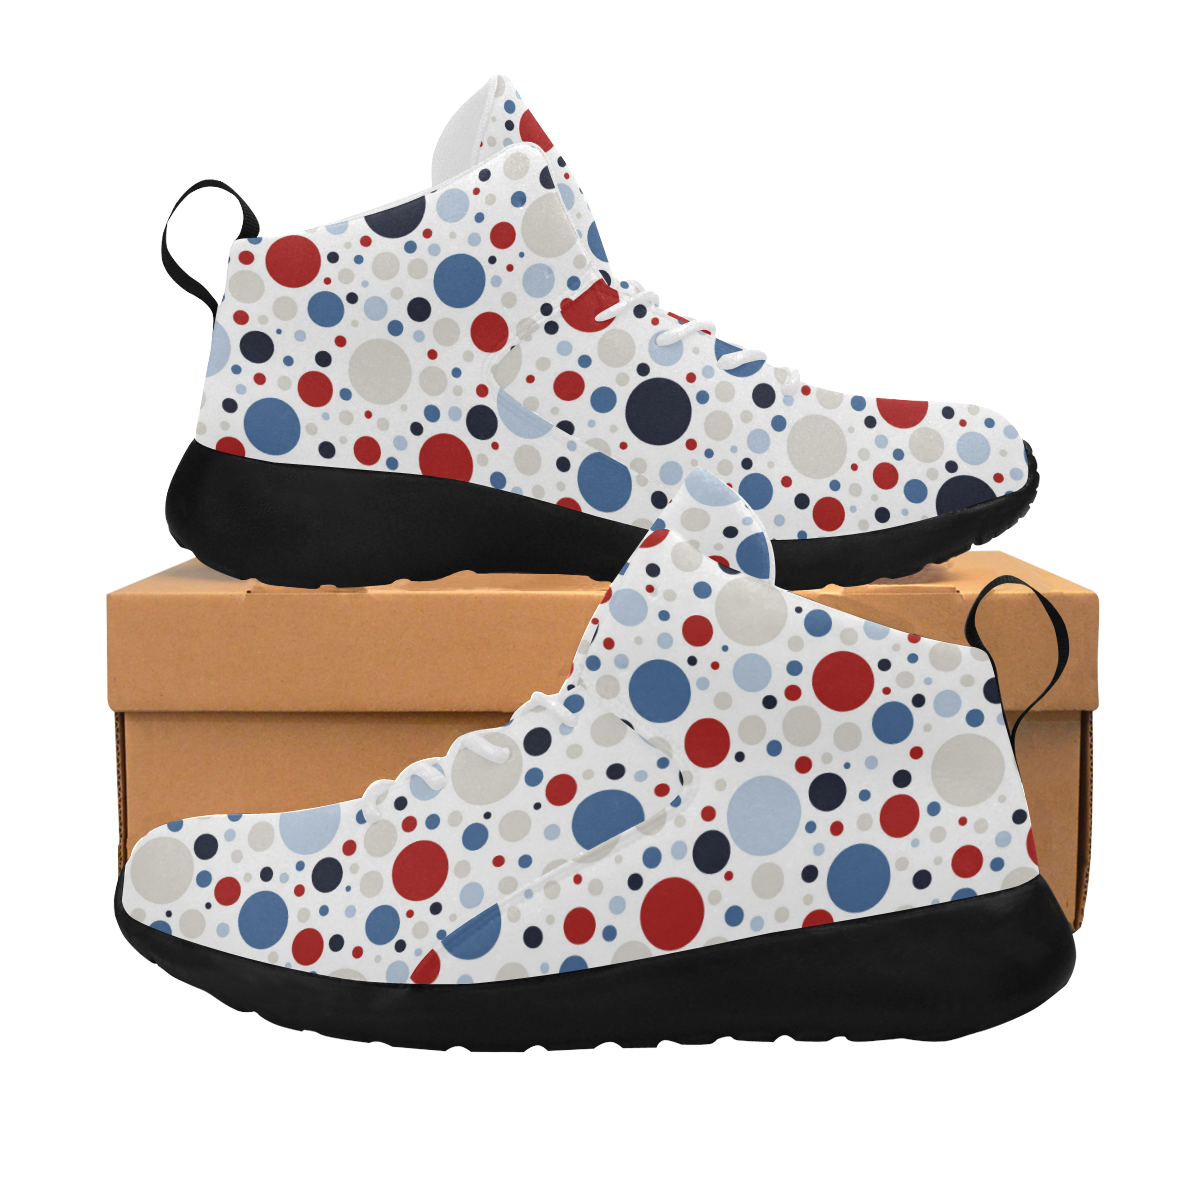 RedWhiteBlue1 Dots Women's Chukka Training Shoes (Model 57502)